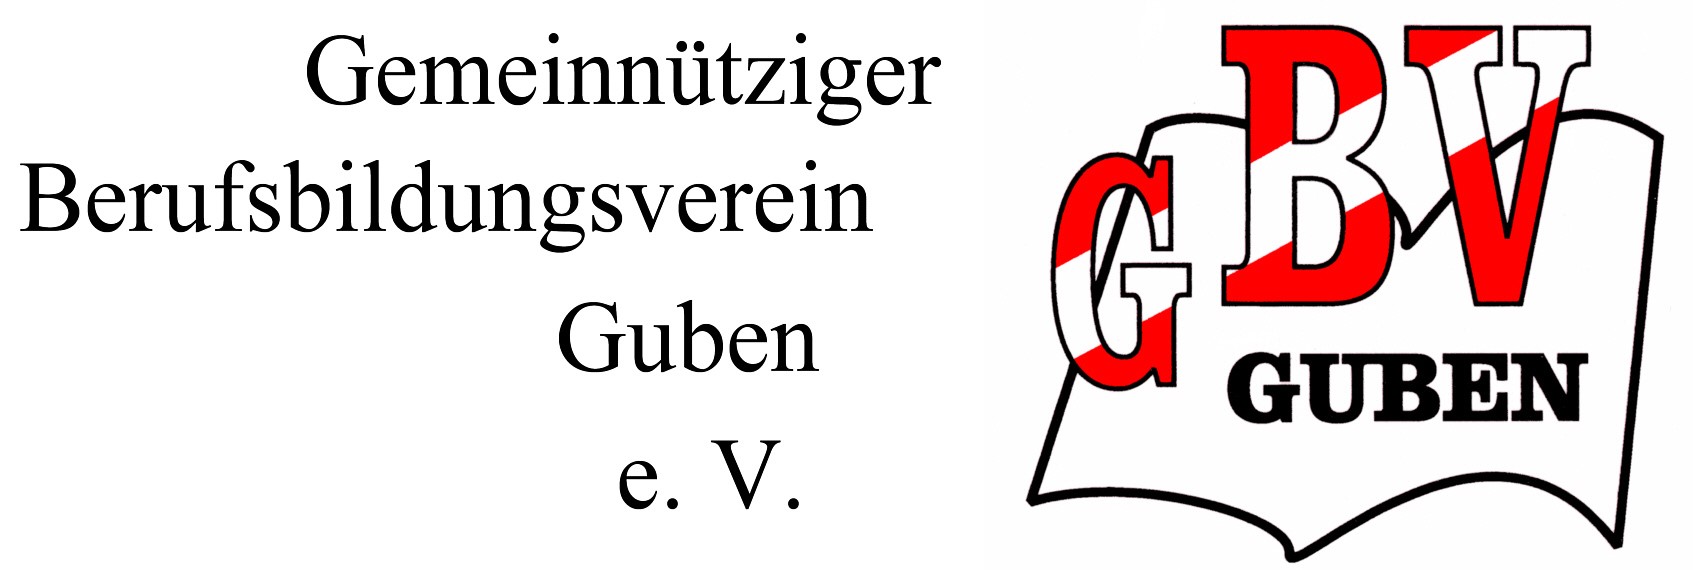 Logo stowarzyszenia kształcenia zawodowego non-profit Guben e. V., nazwa skrócona: GBV Guben